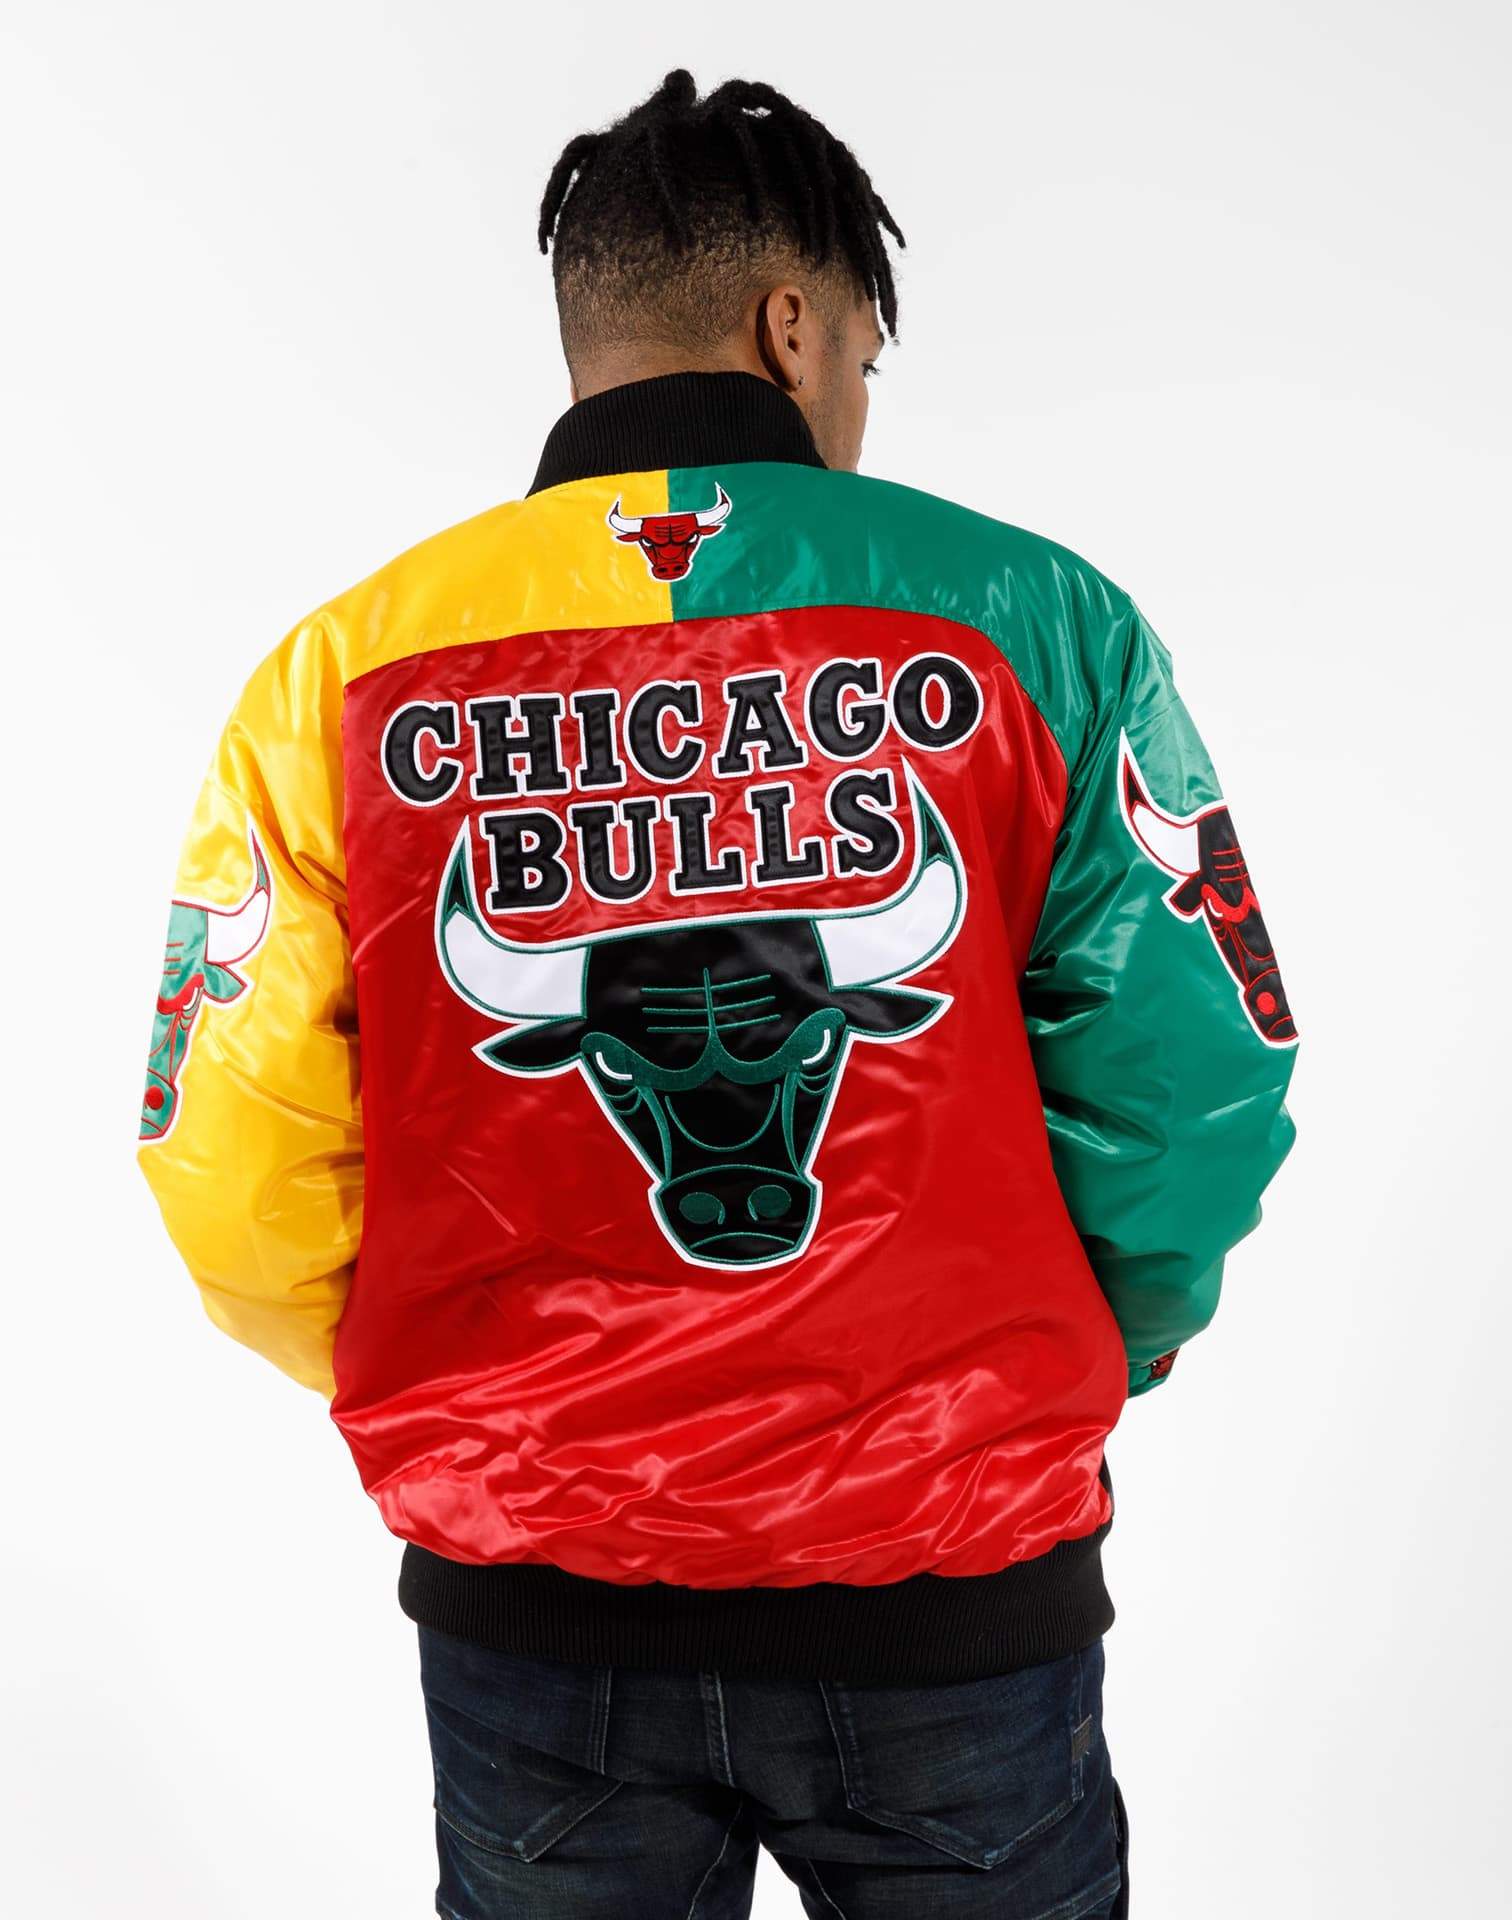 Chicago Bulls Starter Red Bomber Jacket - Nycjackets